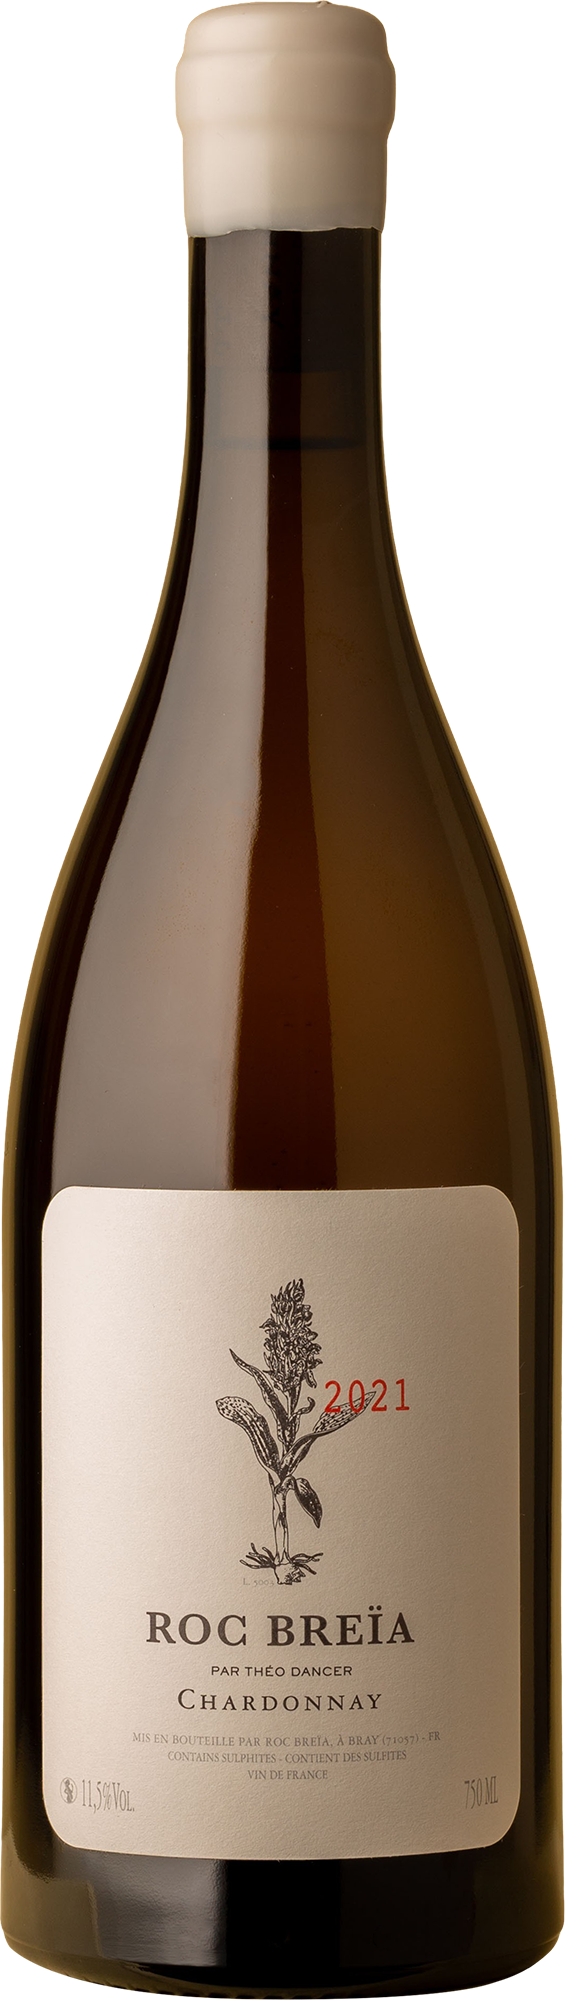 Roc Breïa - Chardonnay 2021